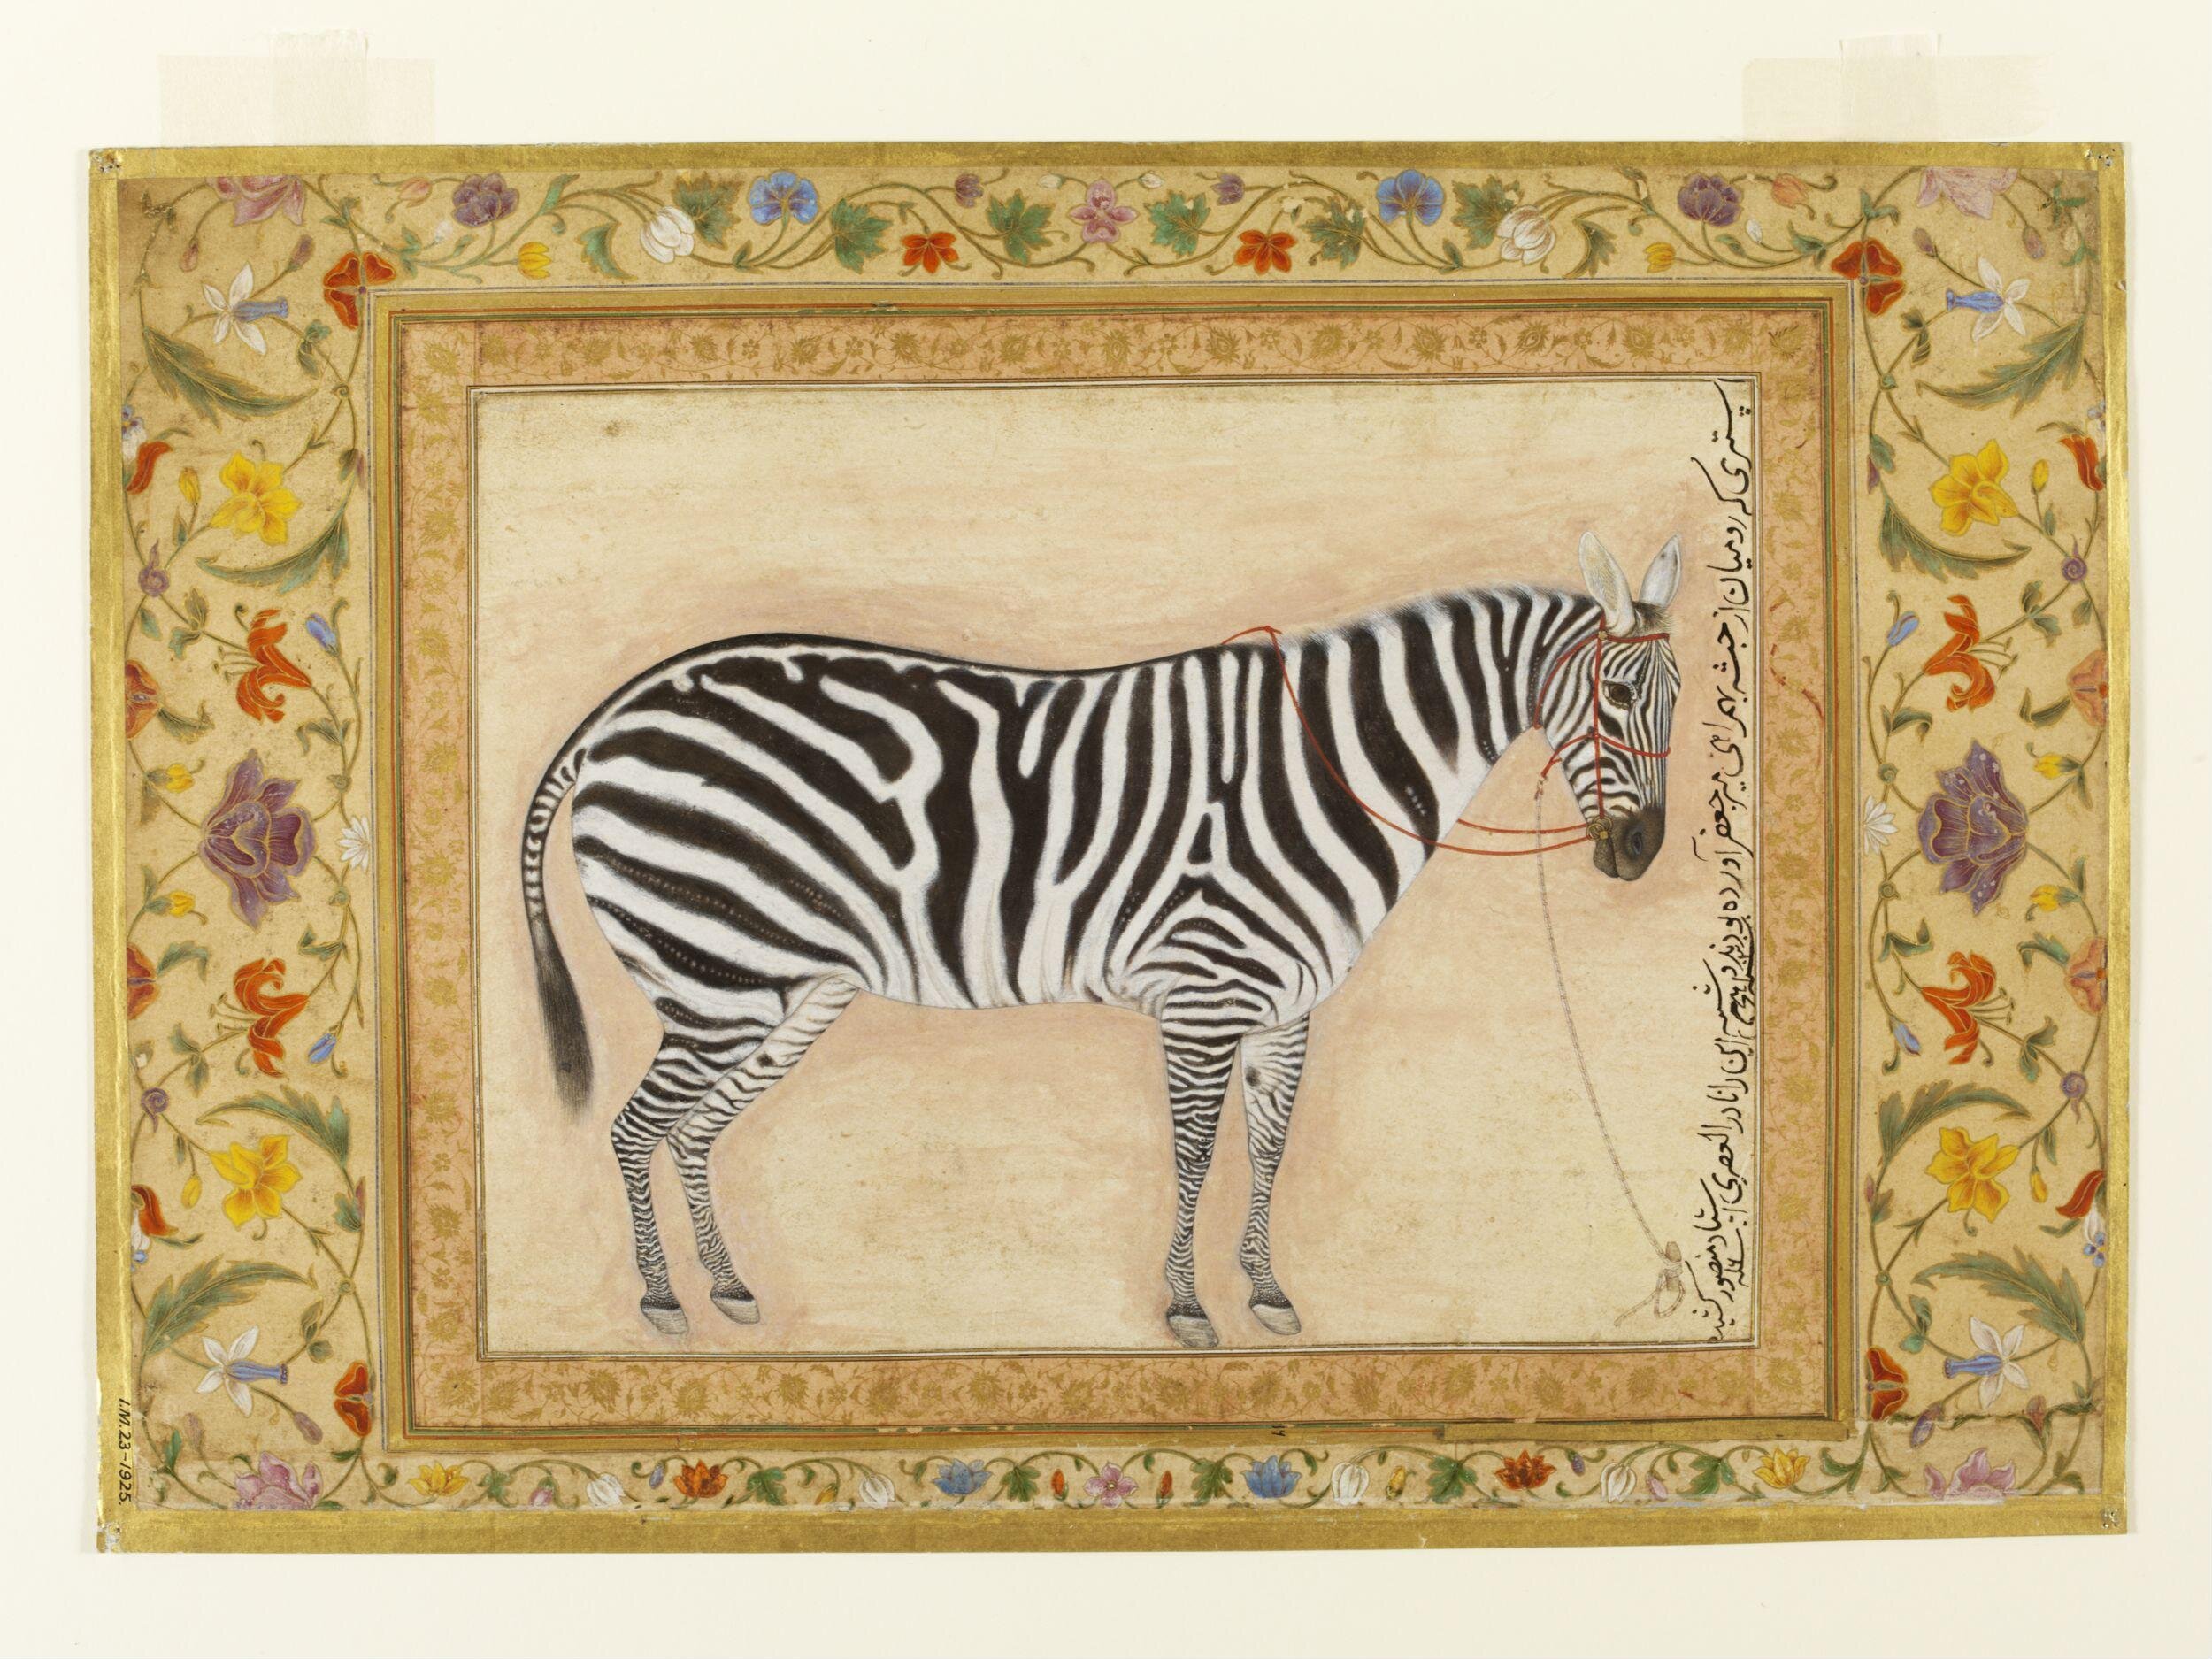 Zebra by Ustad Mansur - 1621 - 38.7 x 24cm Victoria and Albert Museum